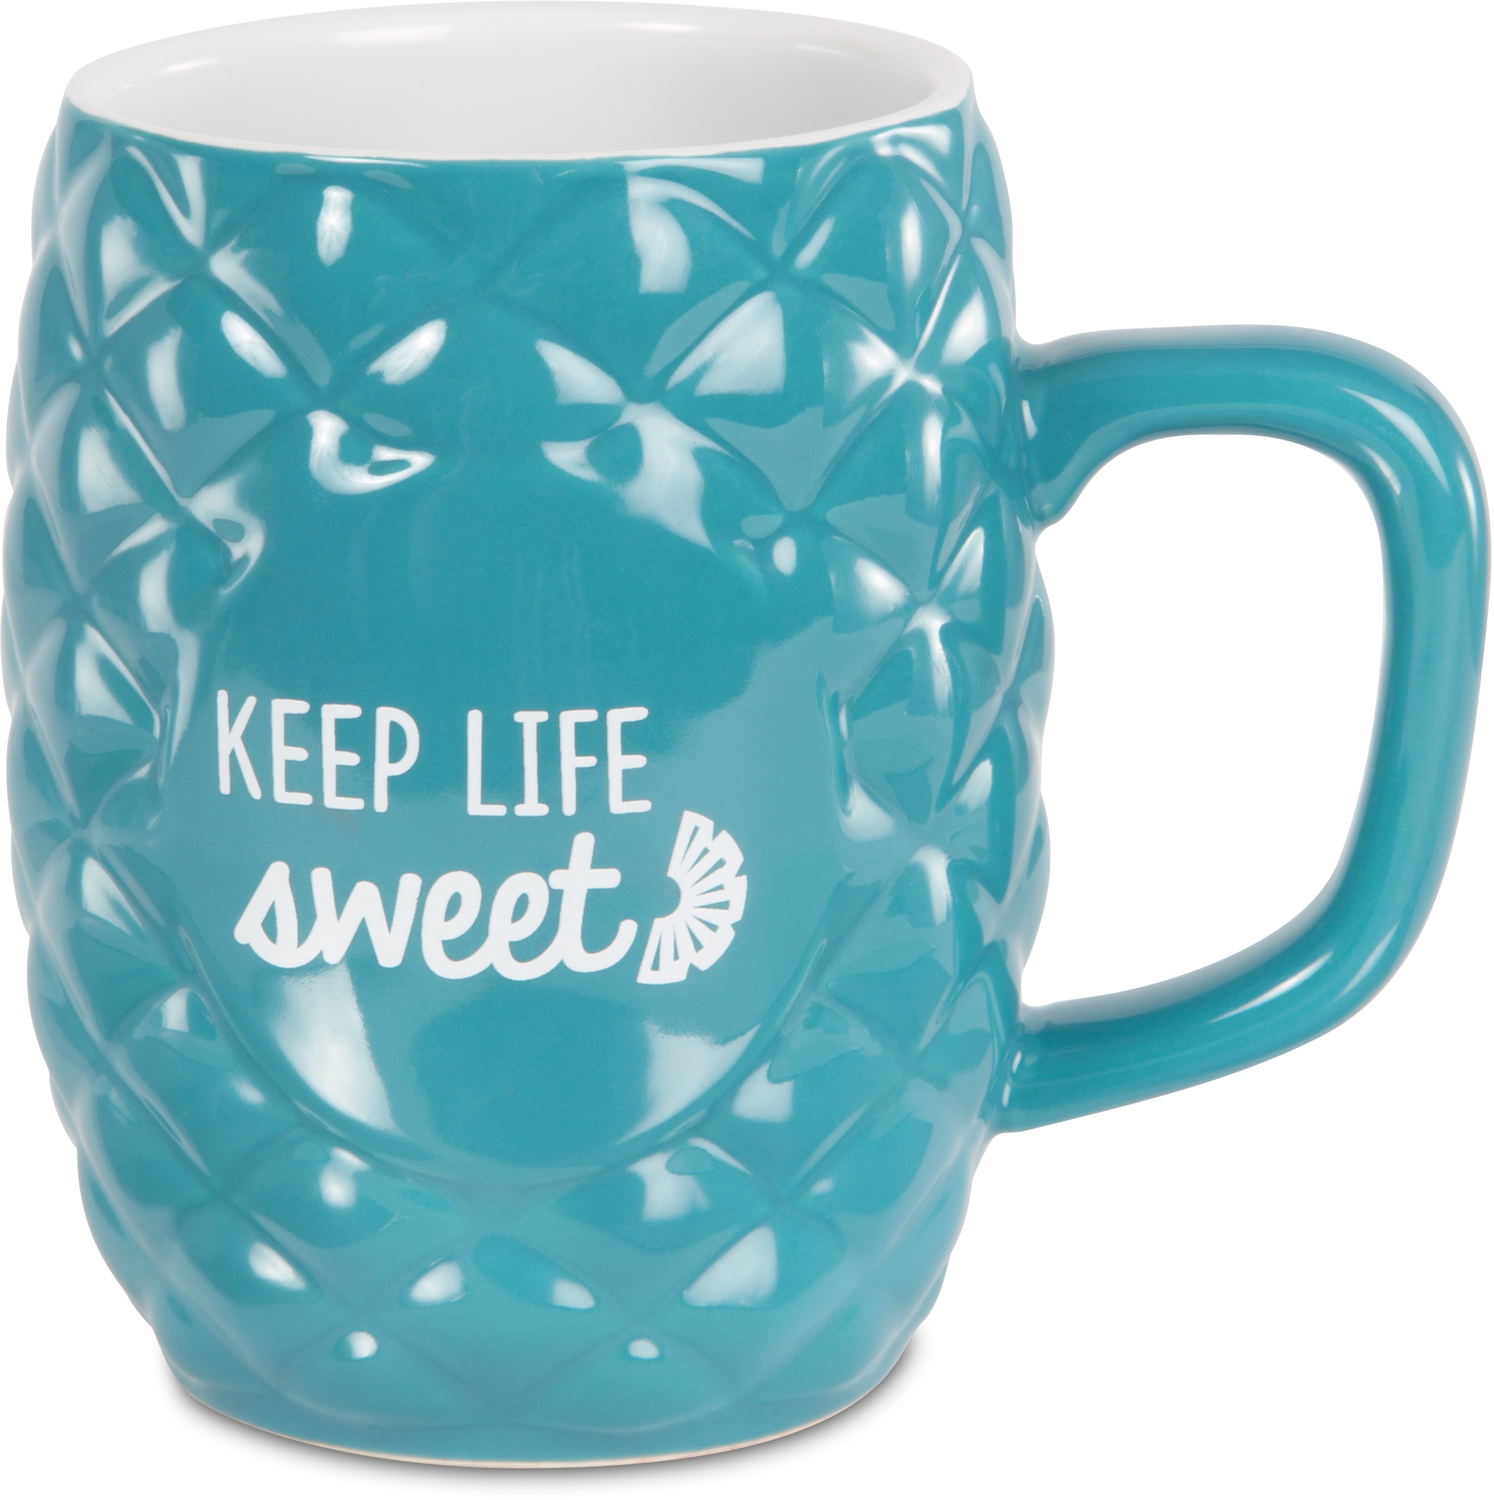 Sweet by Livin' on the Wedge - Sweet - 18 oz Pineapple Mug